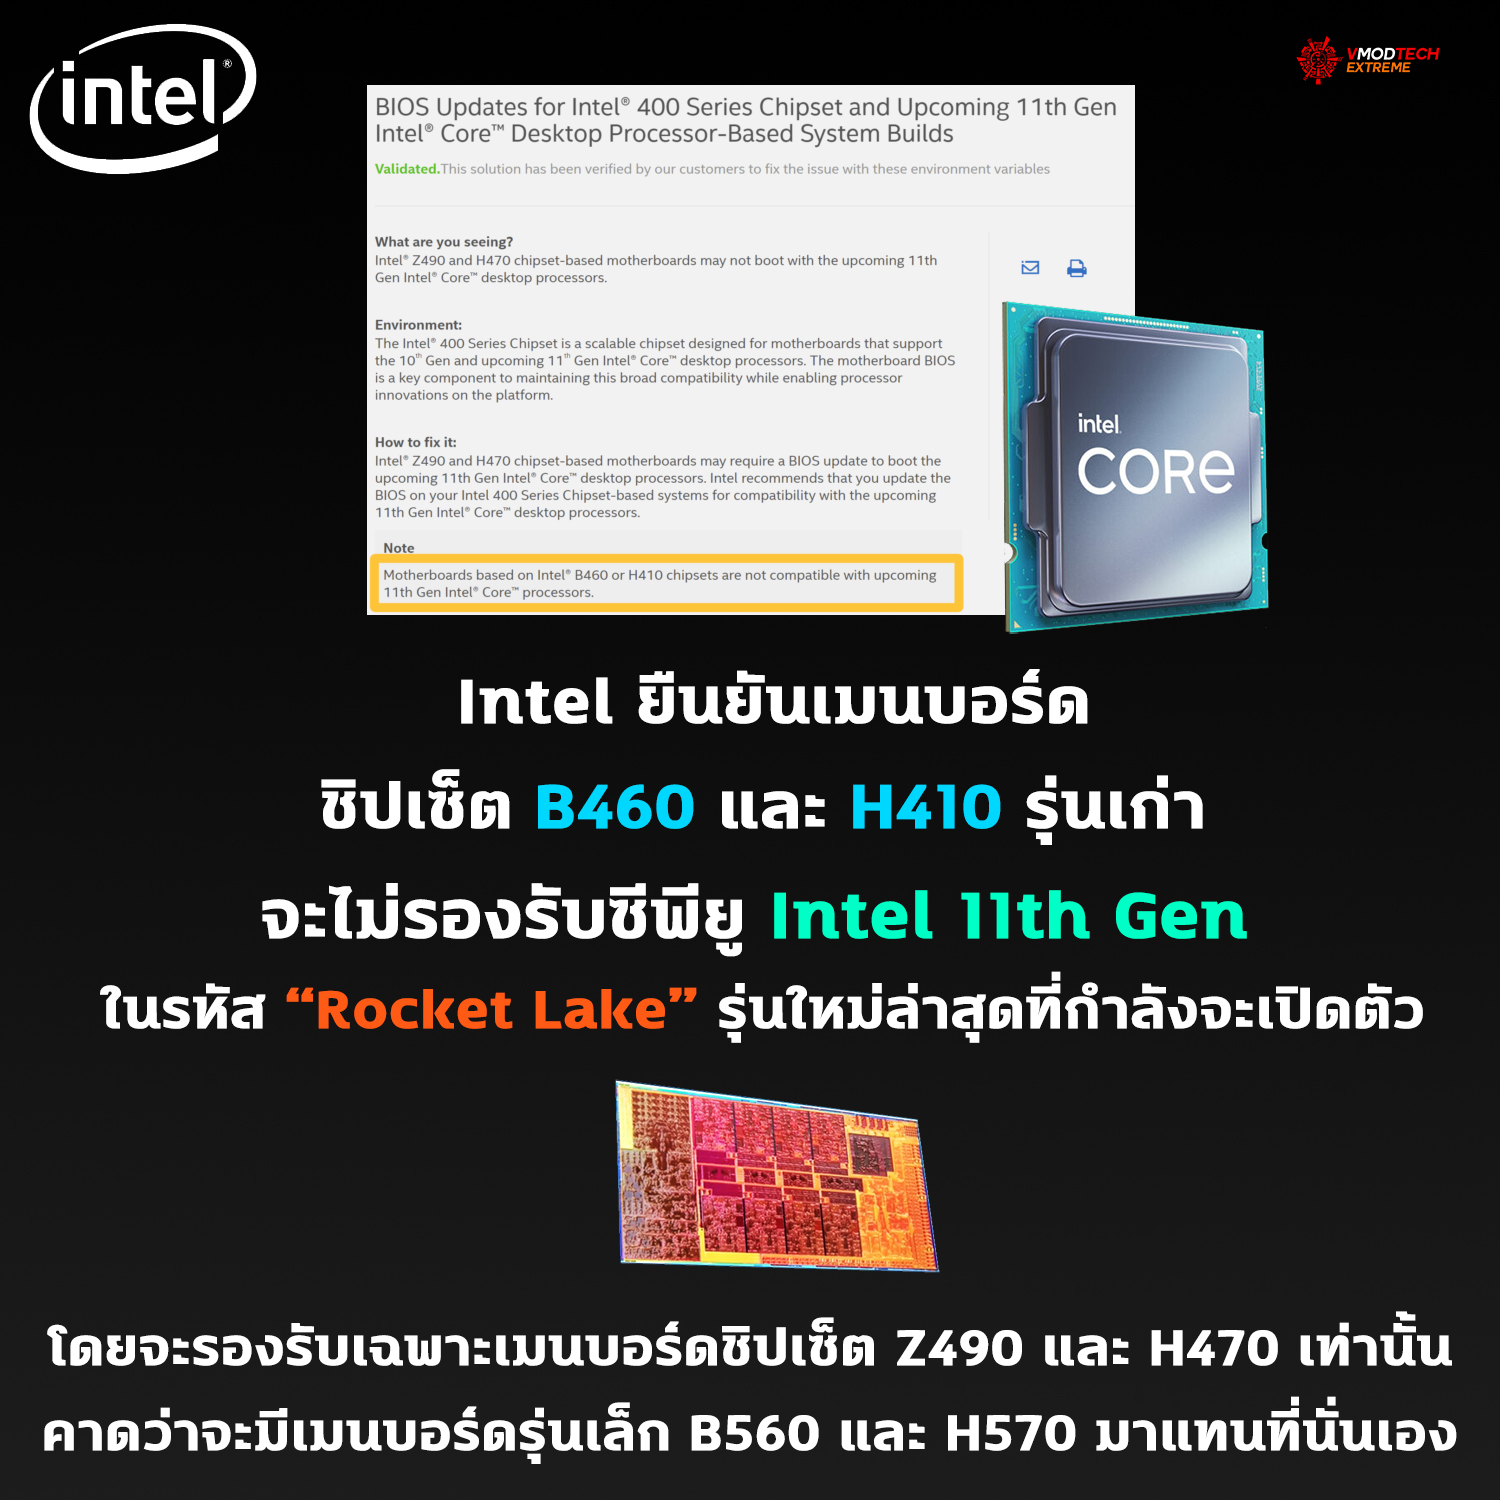 intel confirms b460 and h410 not support 11th gen Intel ยืนยันเมนบอร์ดชิปเซ็ต B460 และ H410 รุ่นเก่าจะไม่รองรับซีพียู Intel 11th Gen ในรหัส Rocket Lake รุ่นใหม่ล่าสุดที่กำลังจะเปิดตัว